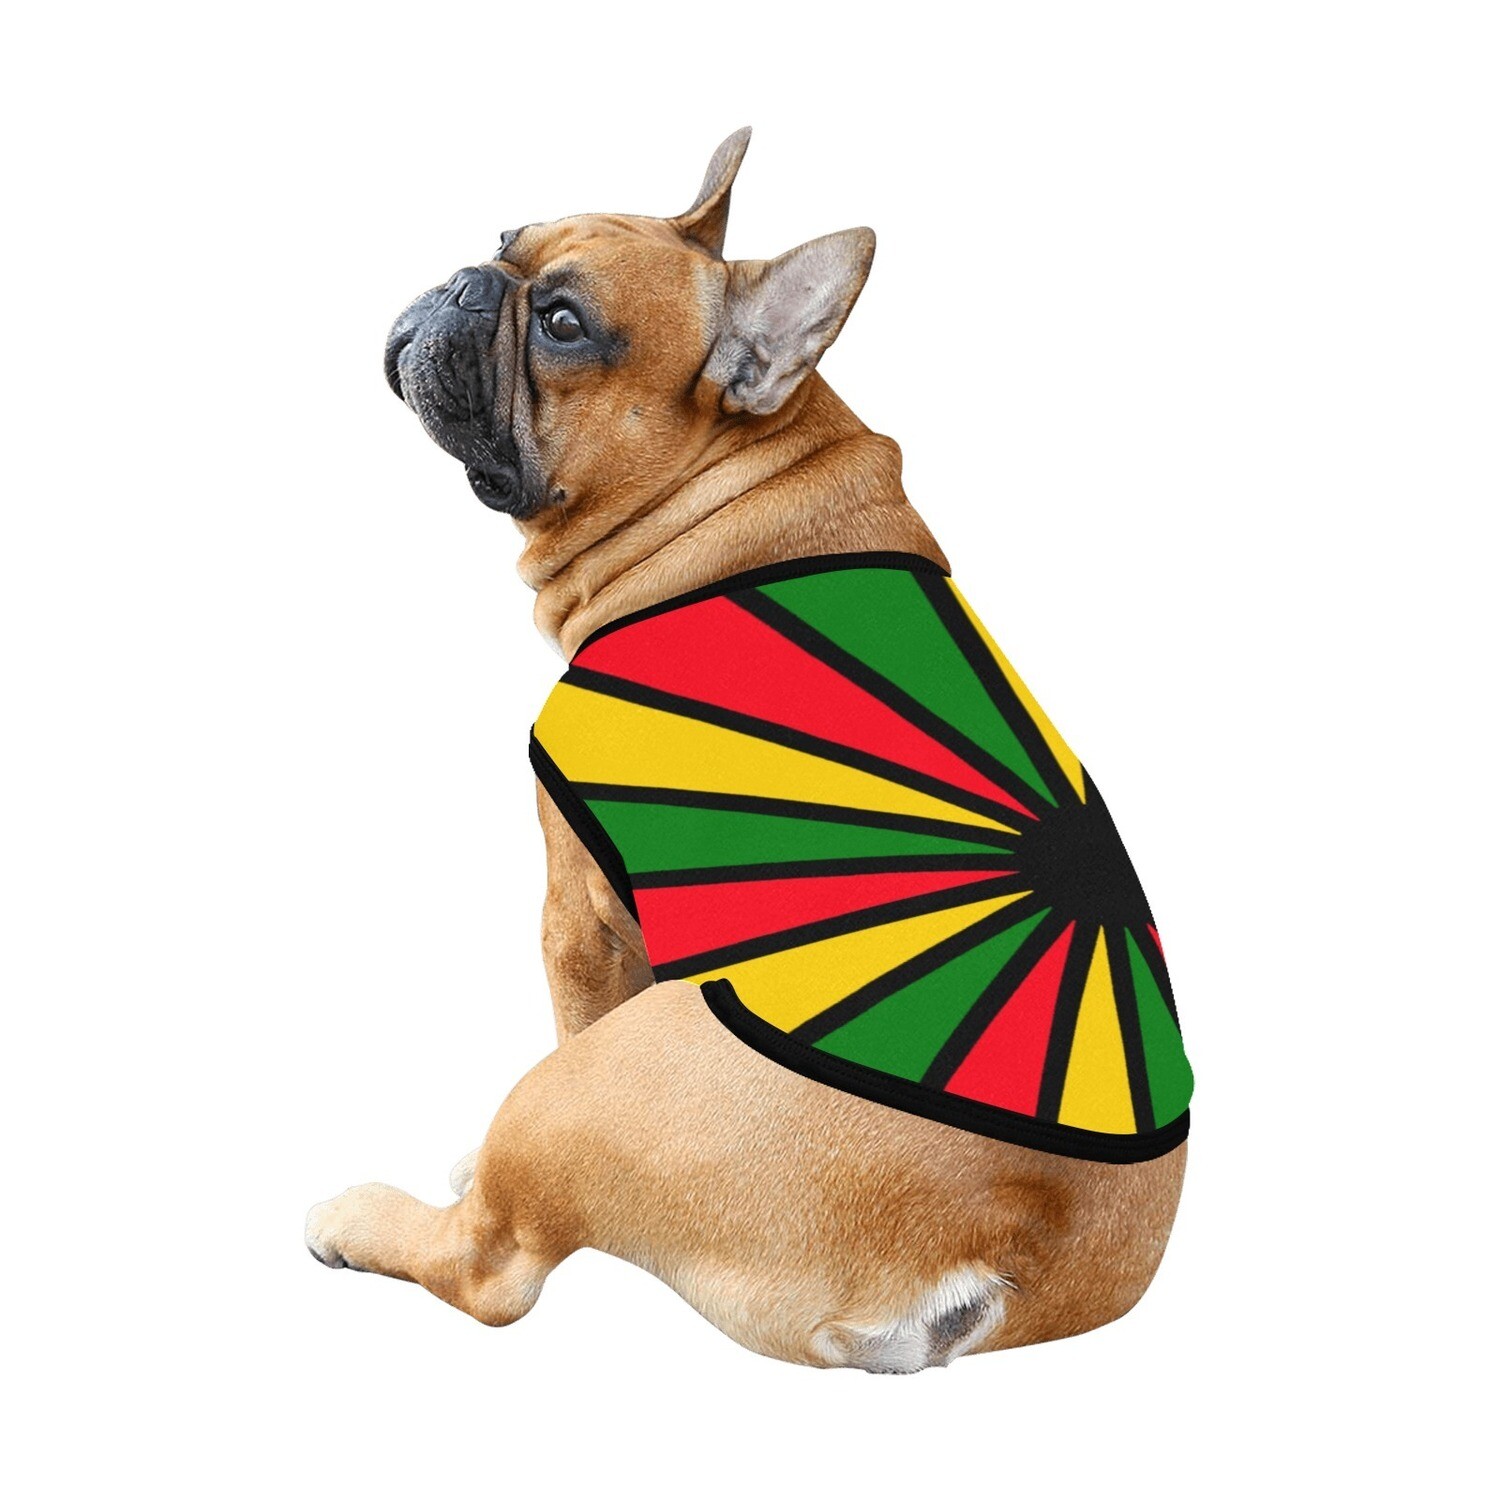 🐕 Rasta Spectrum Dog Tank Top, Dog shirt, Dog clothes, Gifts, 7 sizes XS to 3XL, Jamaican flag, Jamaica, dog tank top, dog t-shirt, jerseyL, dog gifts, black